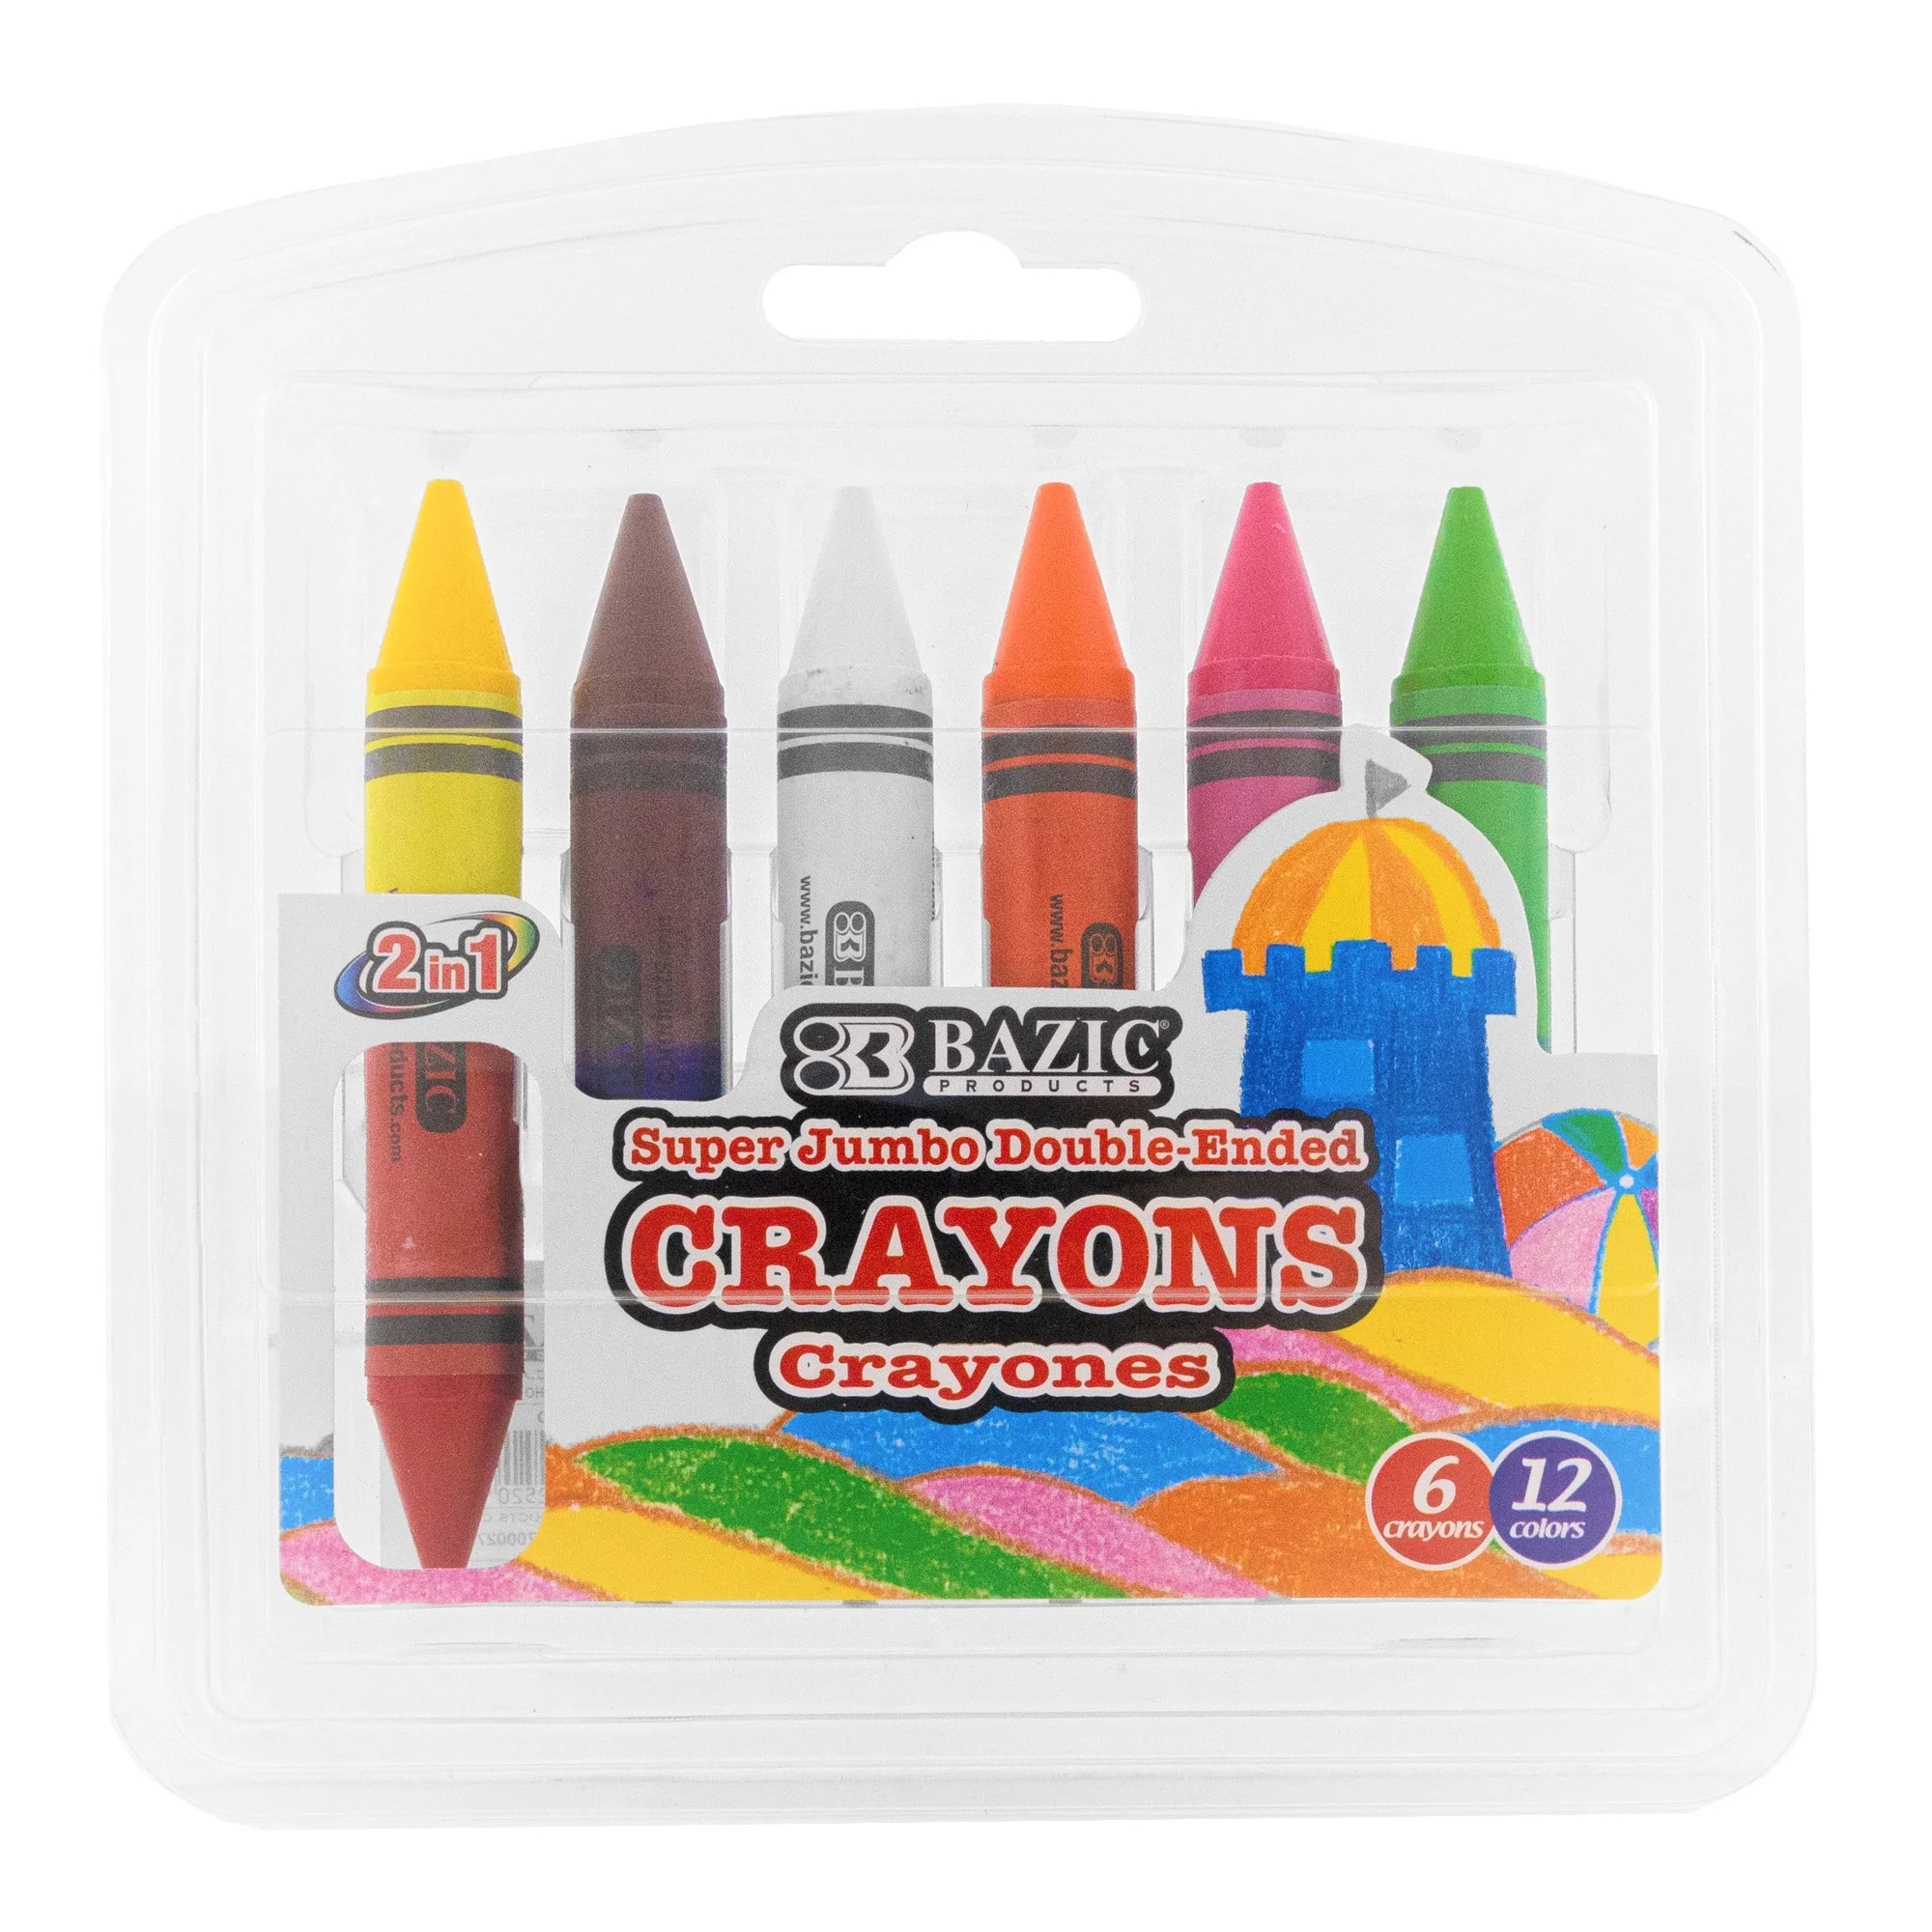 Crayola Back To School Supplies Set (80ct), Crayons, Markers